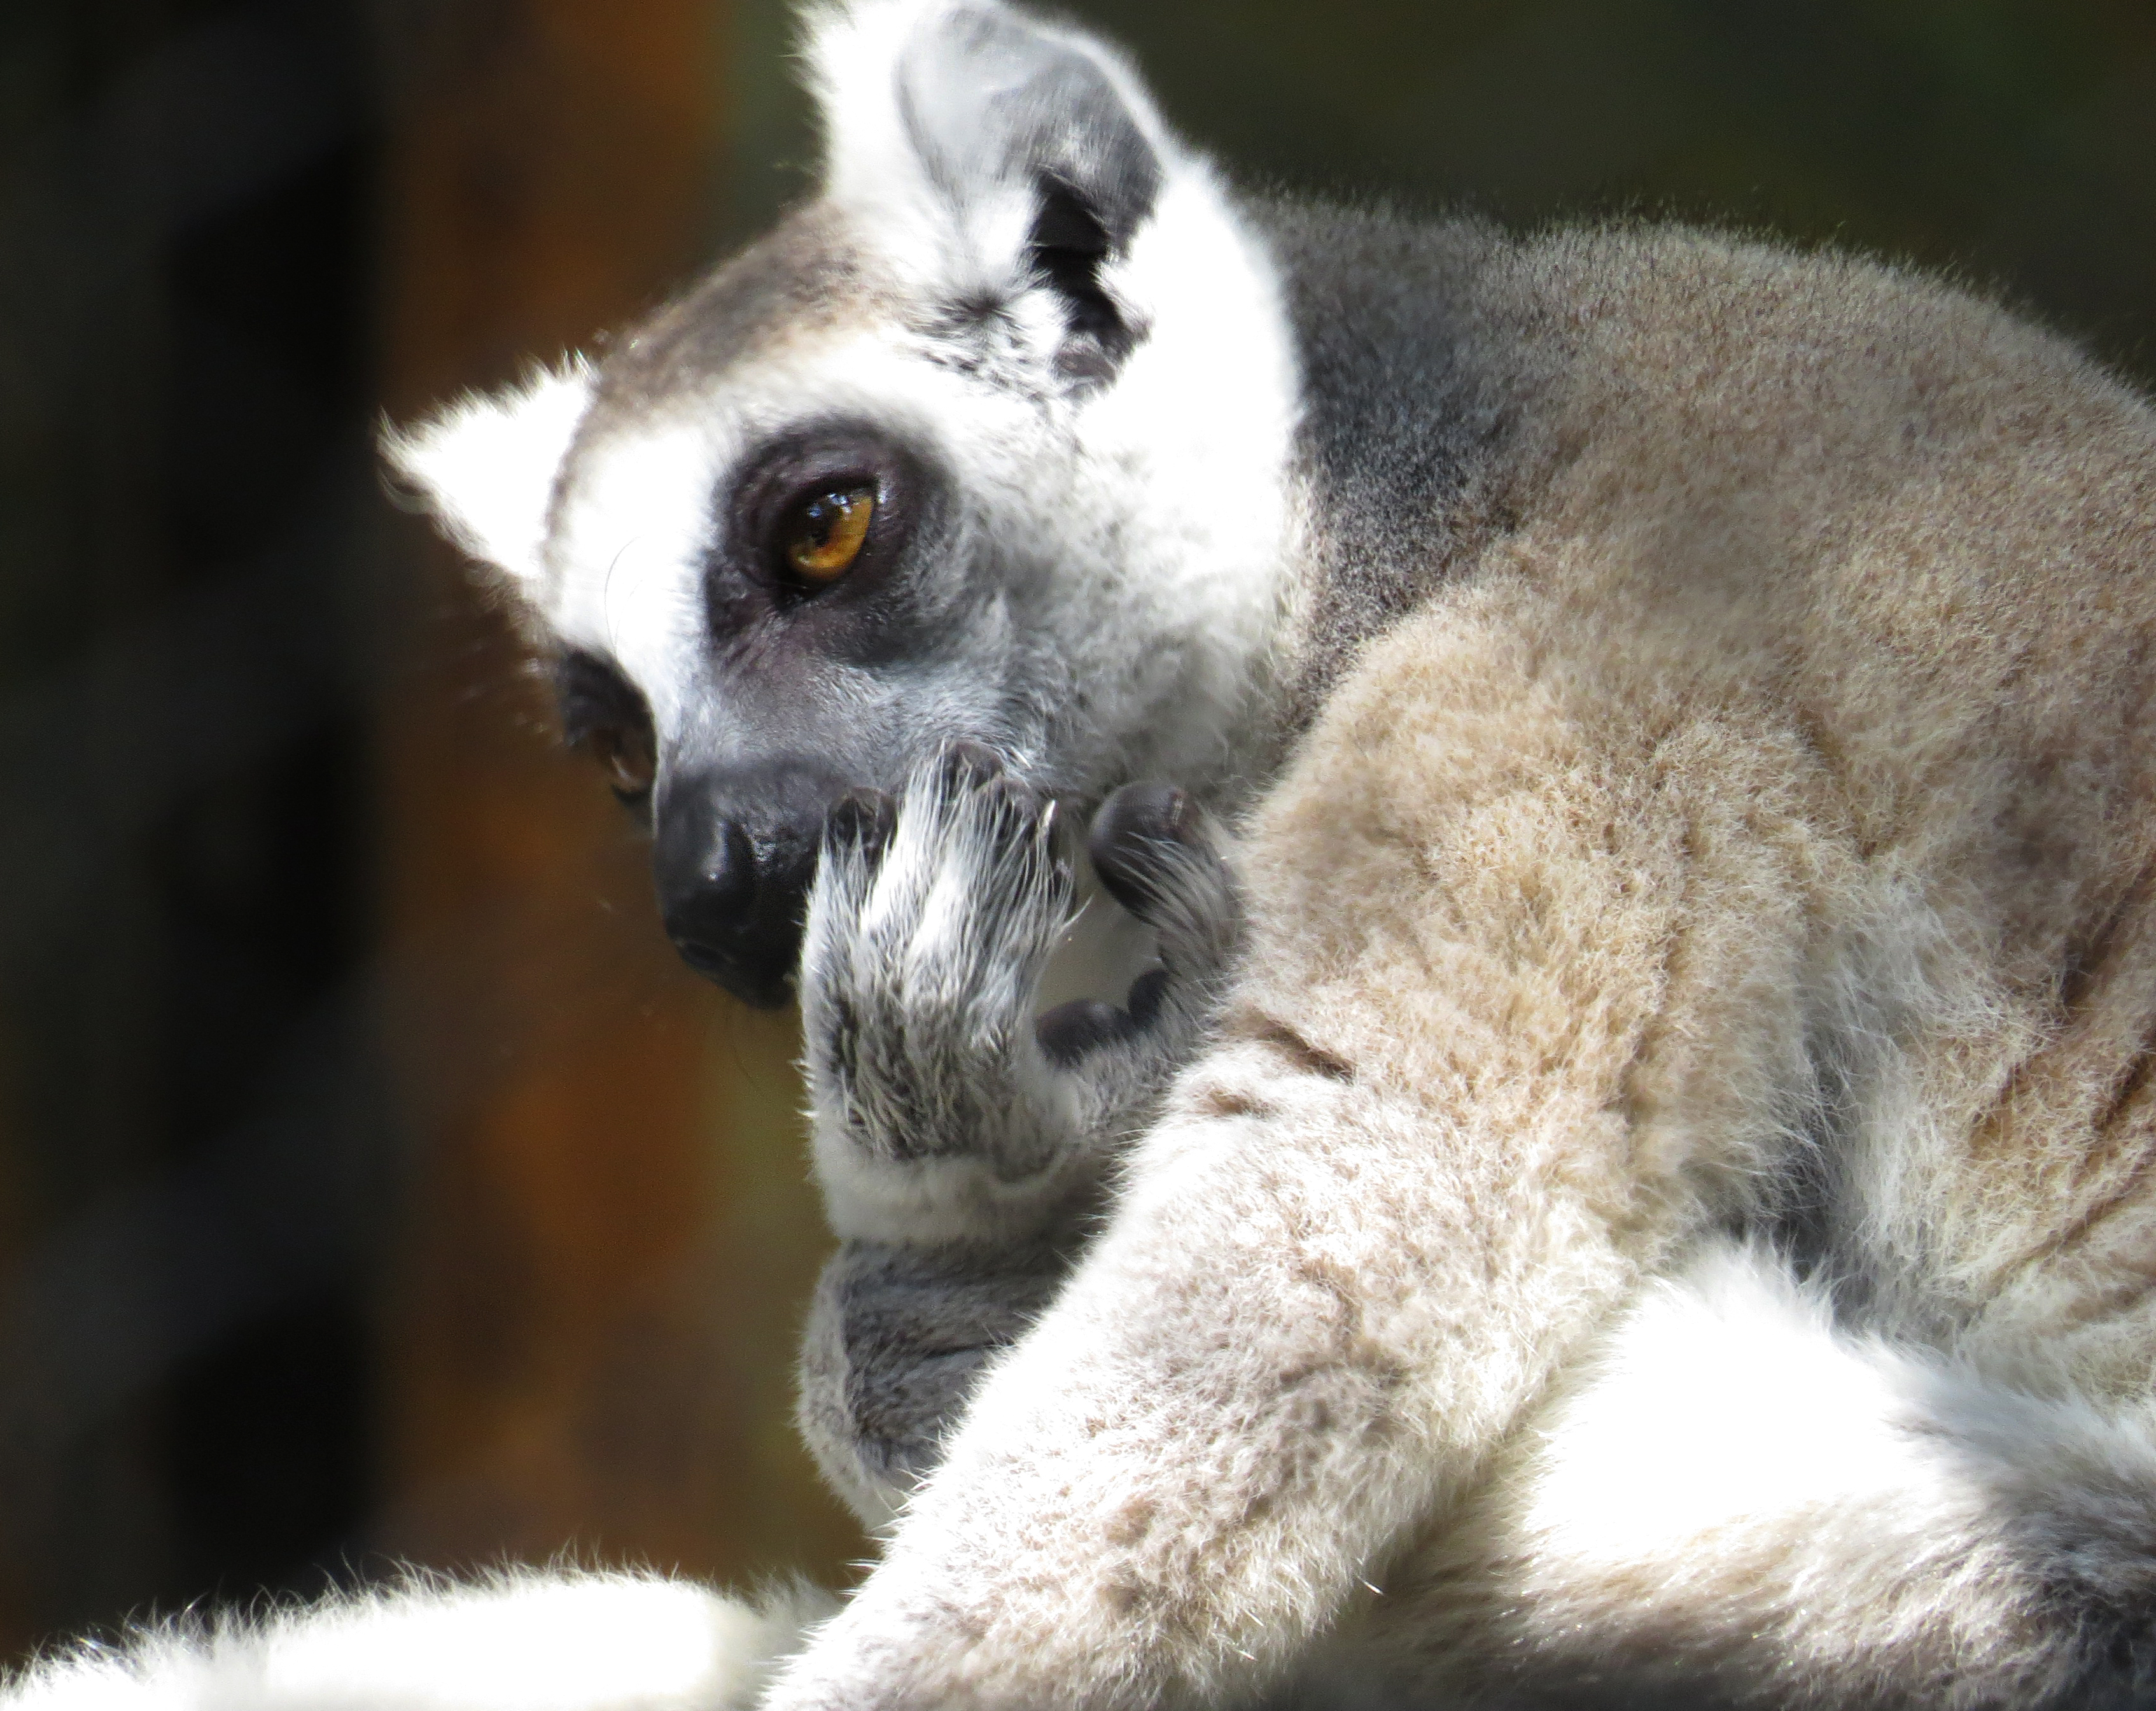 File:Indian Lemur at Mysore zoo.jpg - Wikimedia Commons